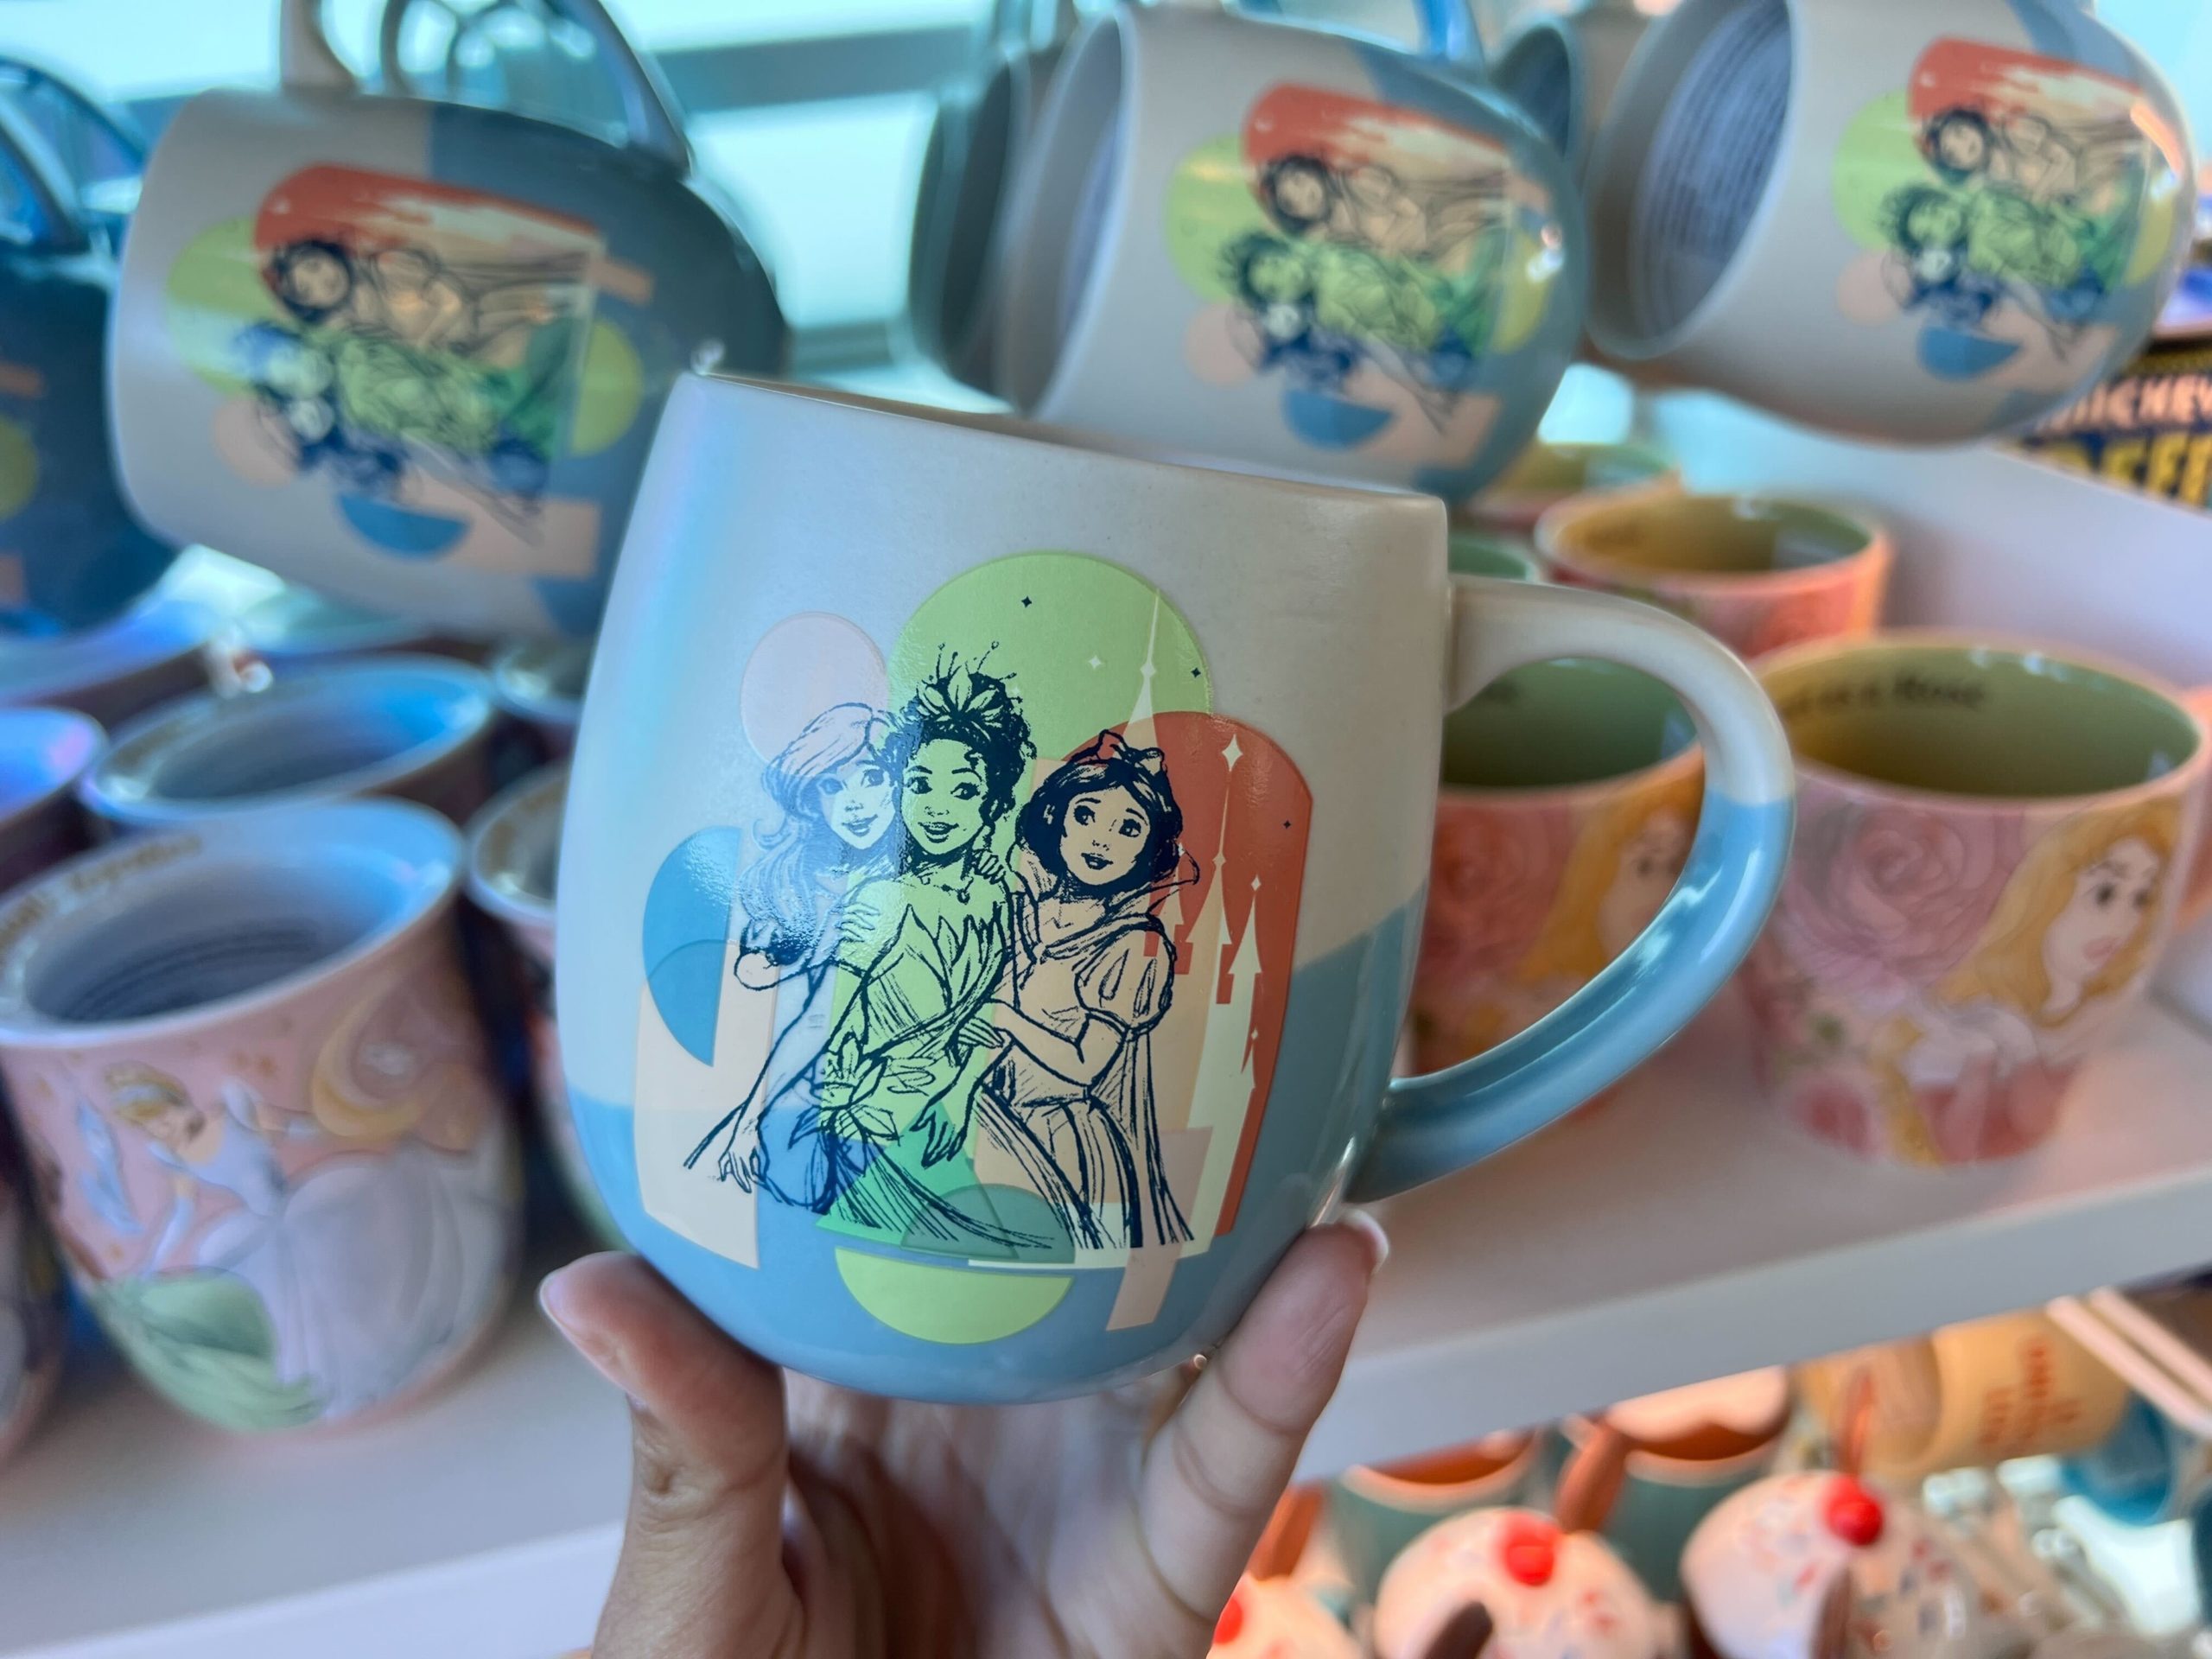 Disney Travel Mug - Disney Princesses with Tiara Lid